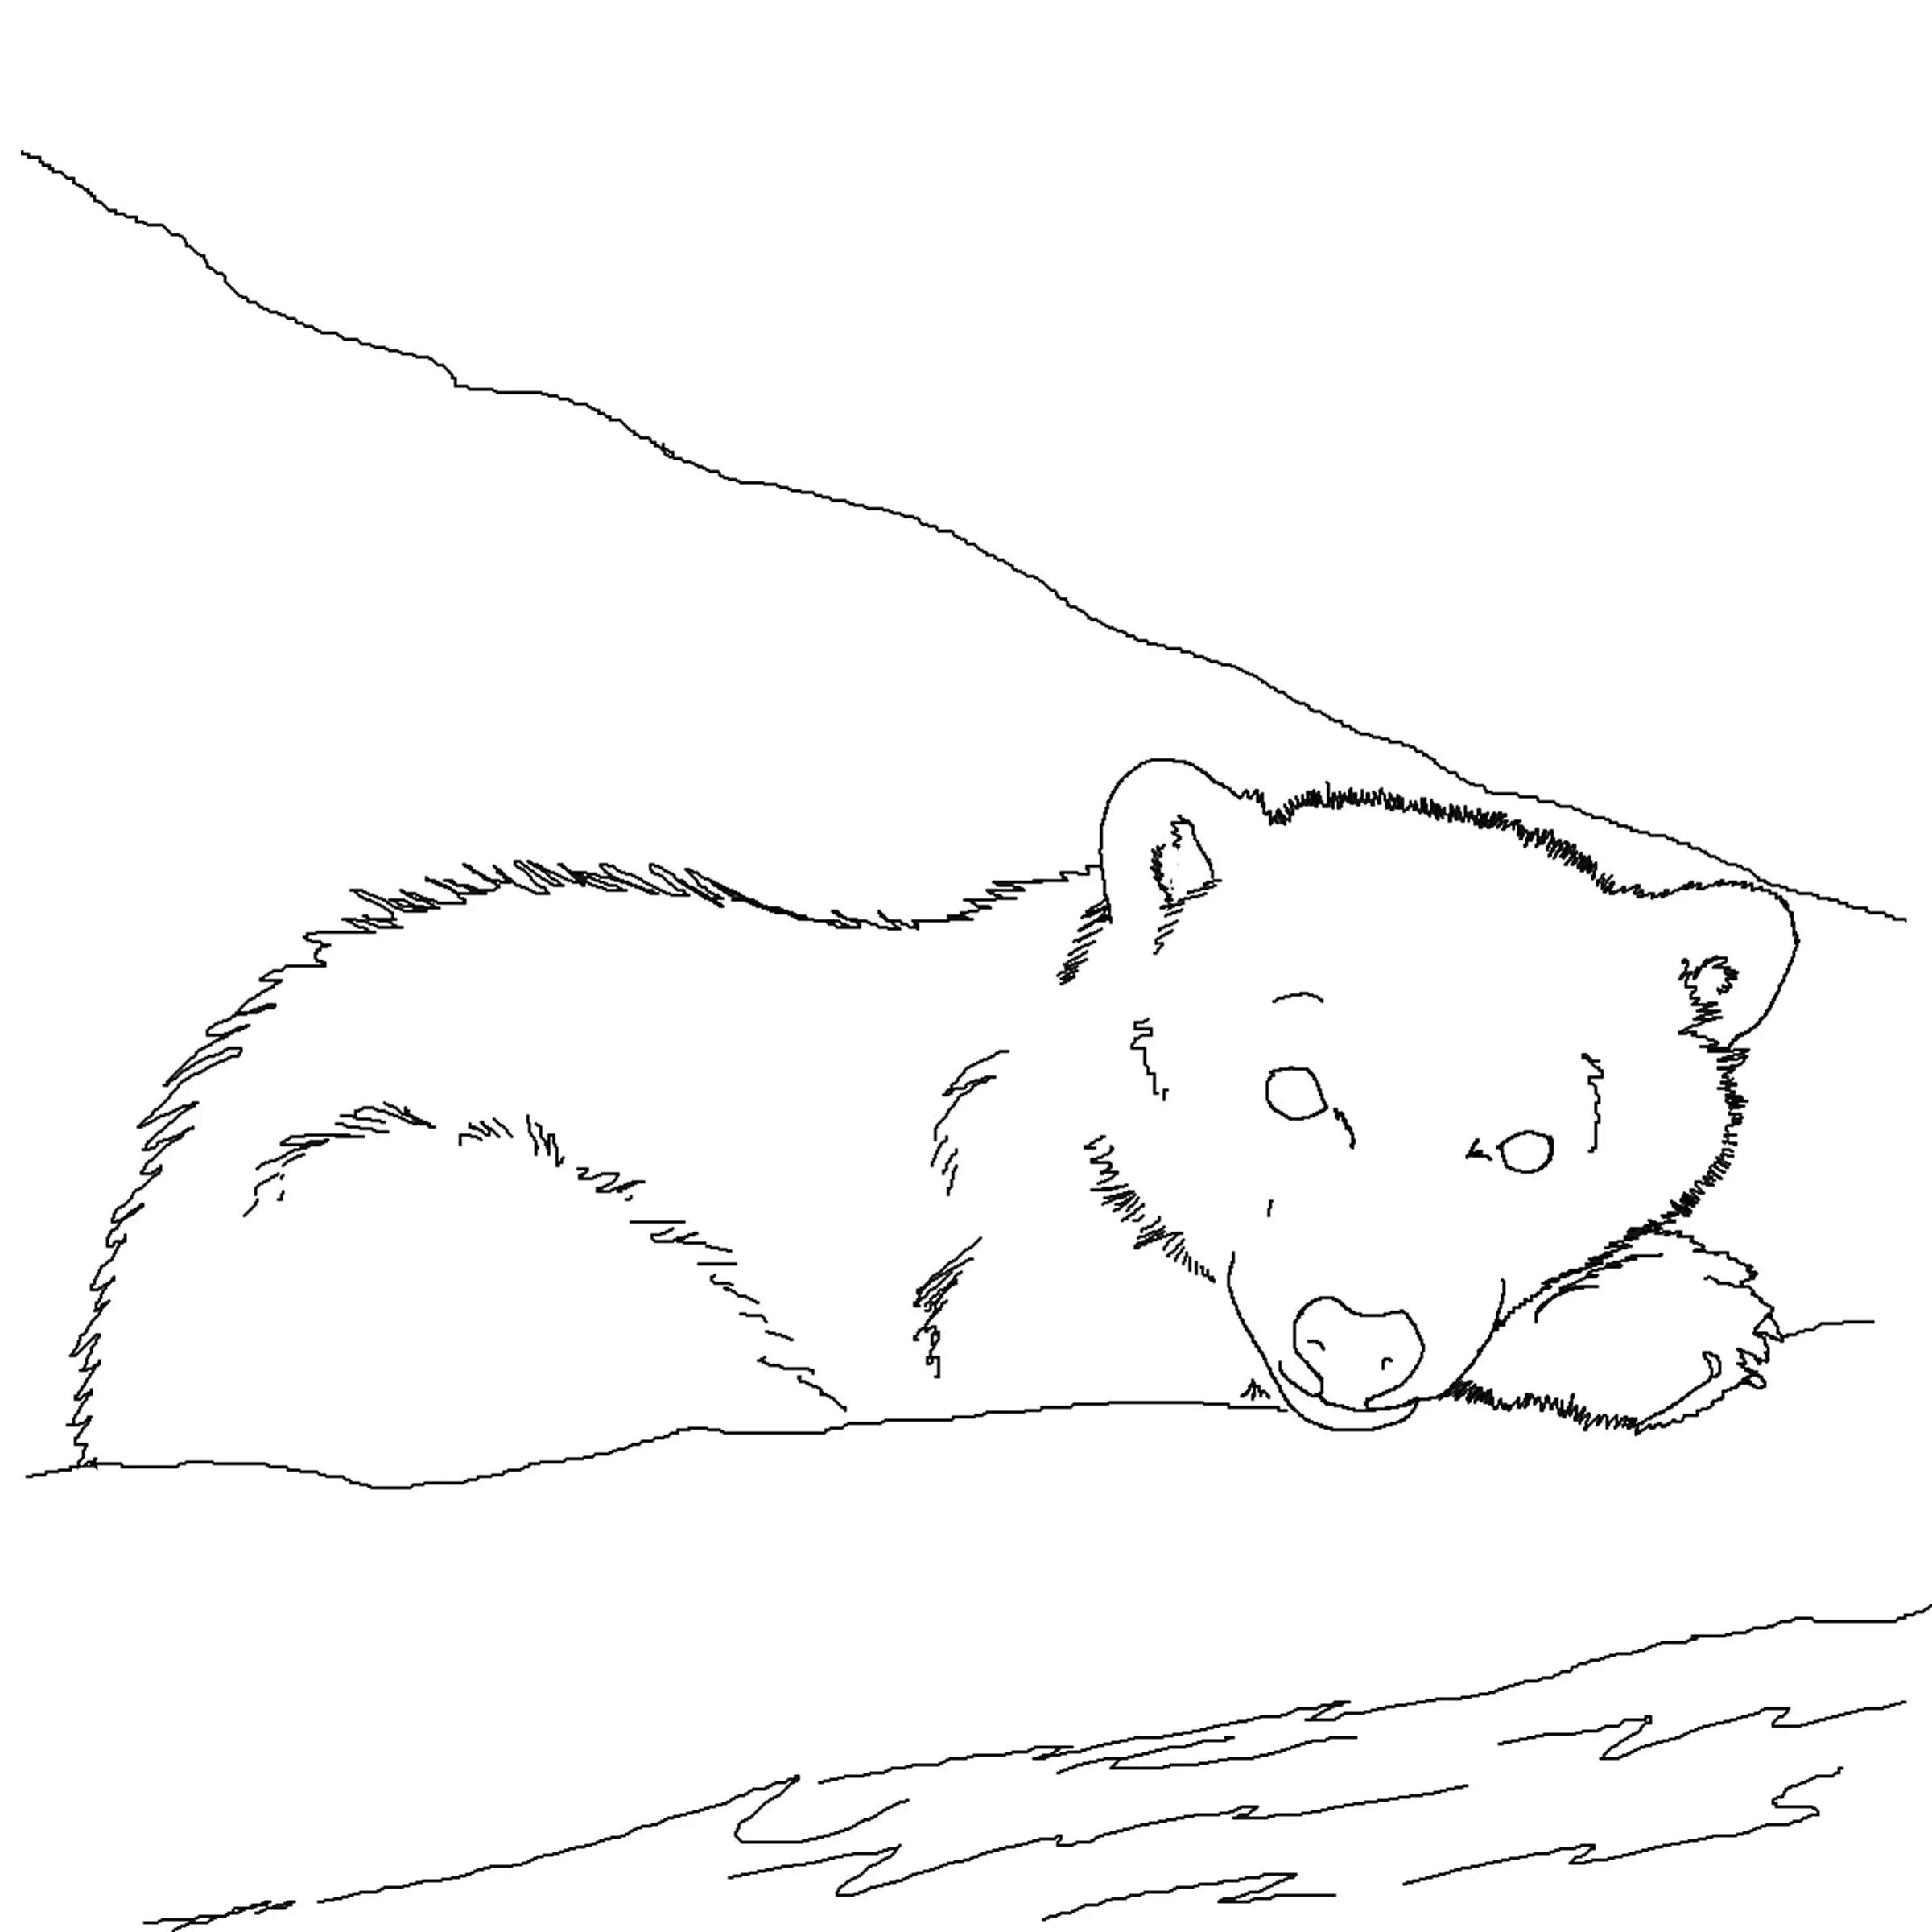 Vivacious coloring page: почему медведи спят зимой?